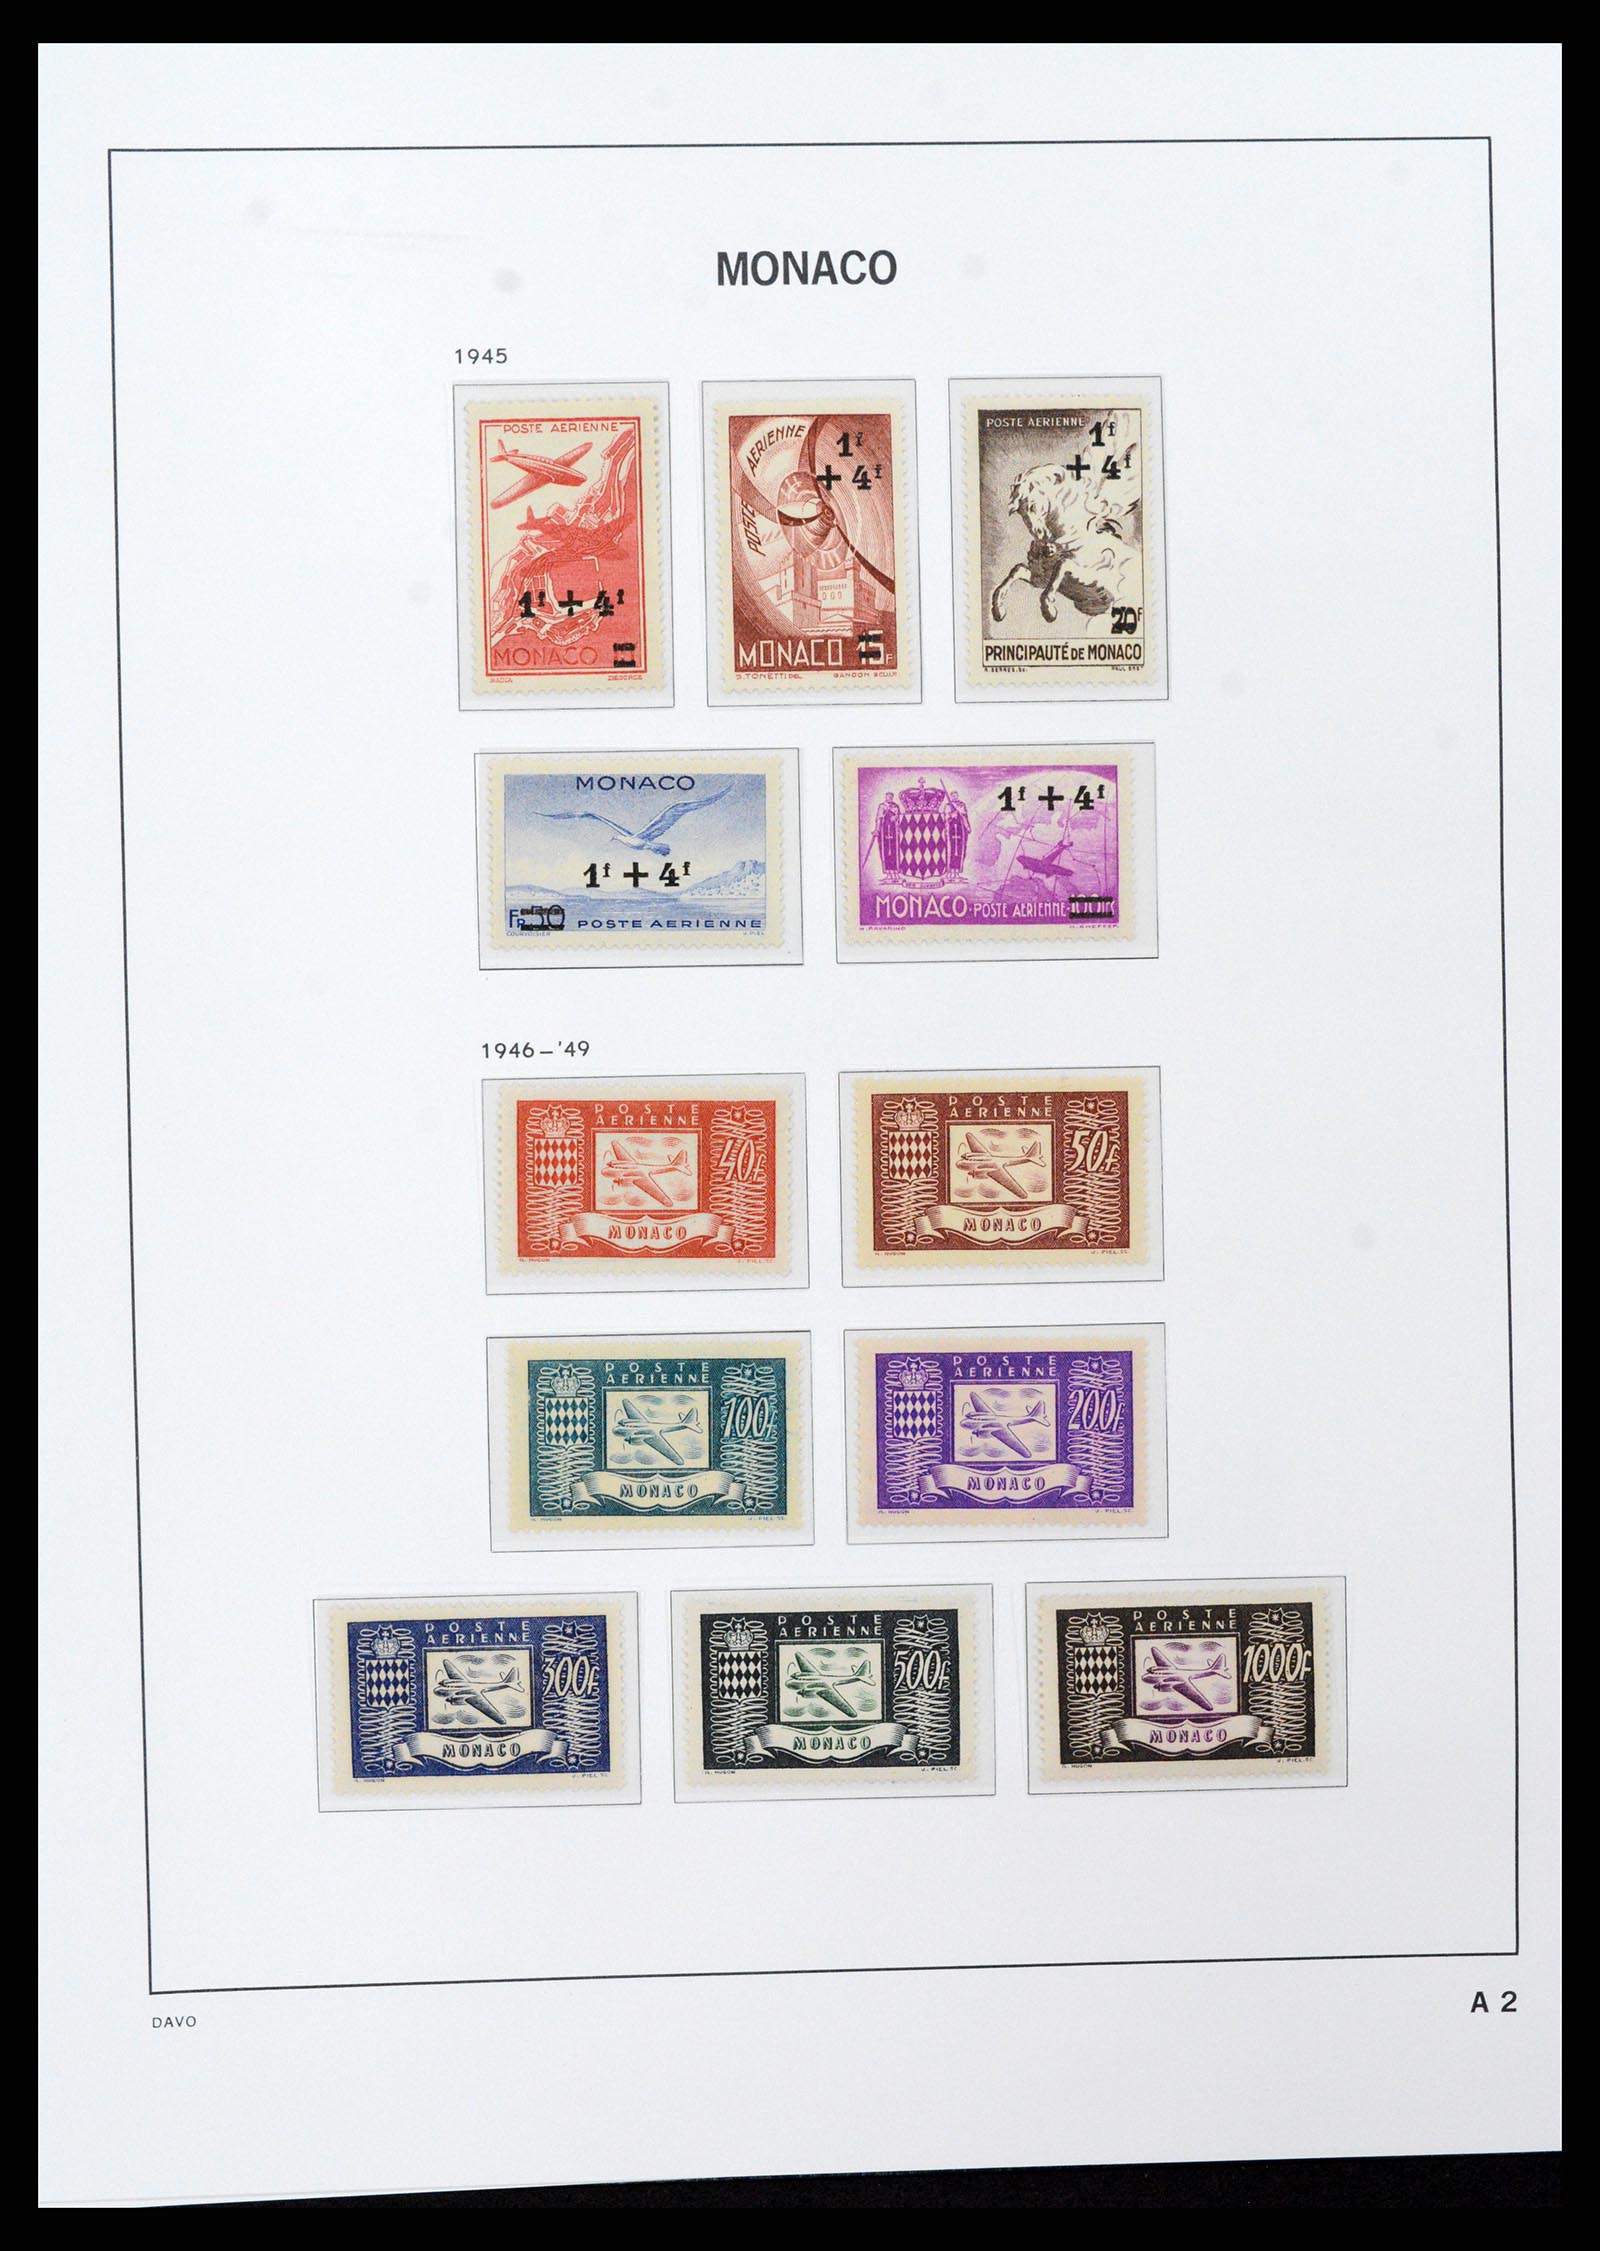 37279 059 - Stamp collection 37279 Monaco 1885-1969.